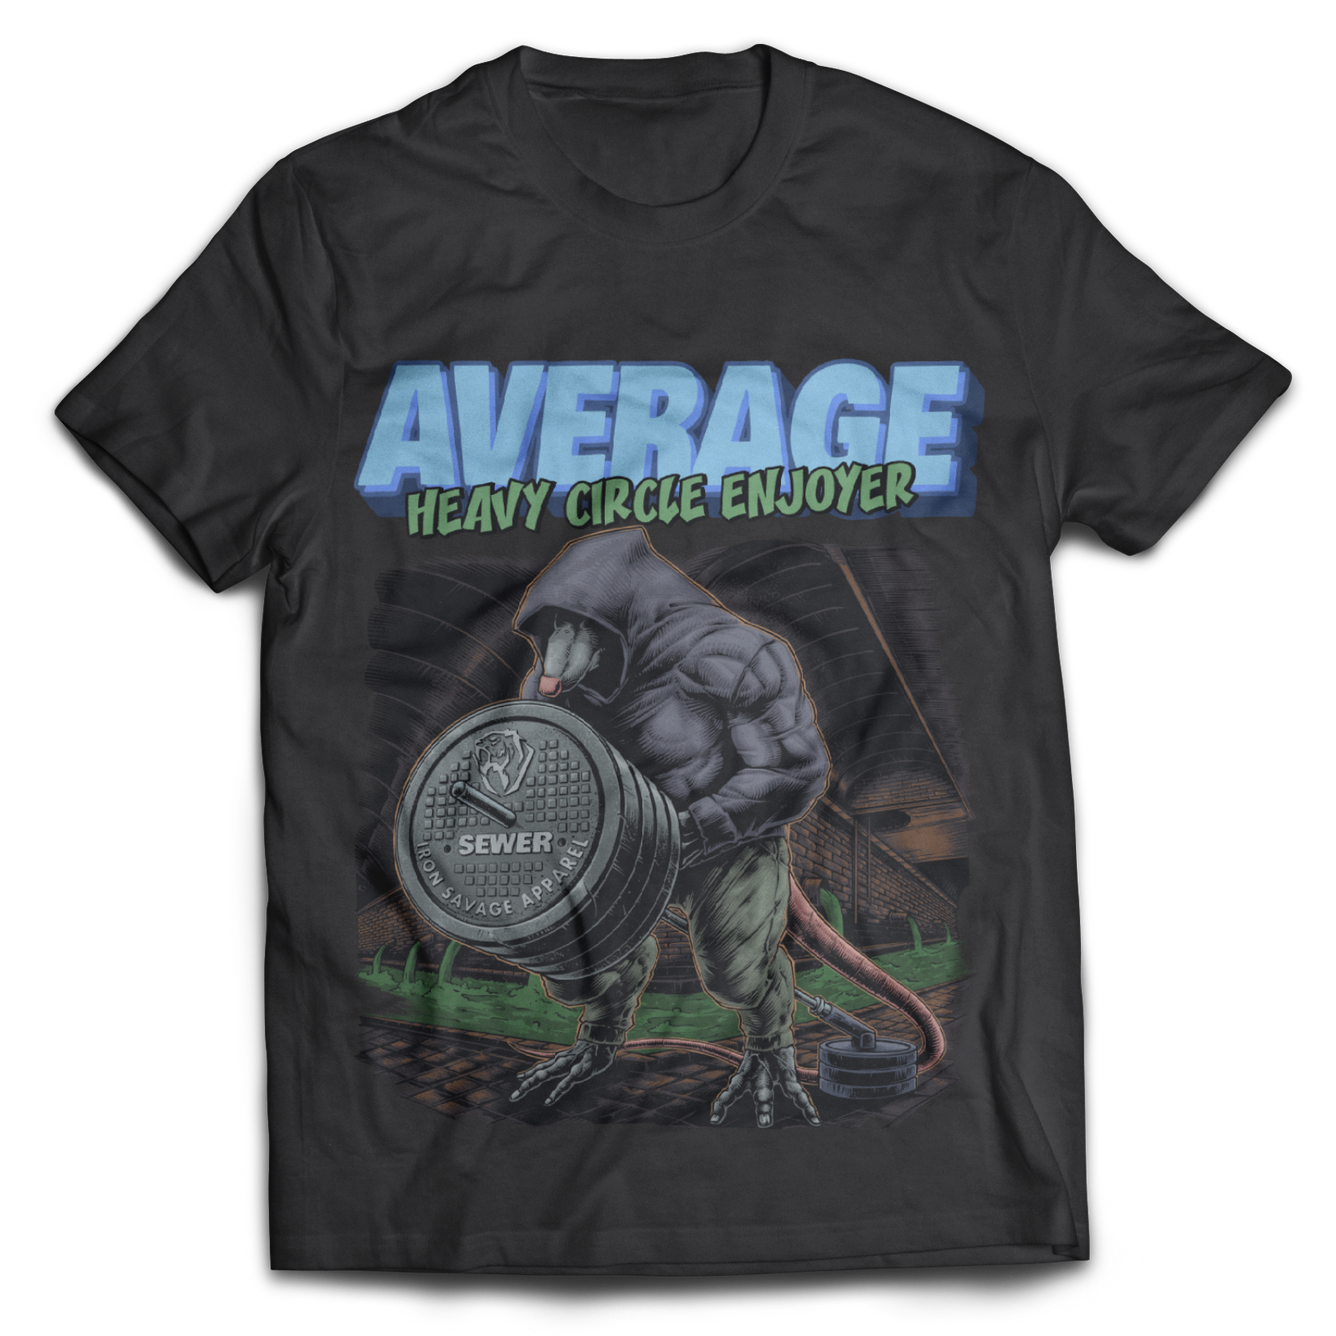 Gym Rat: Average heavy circle enjoyer T-shirt